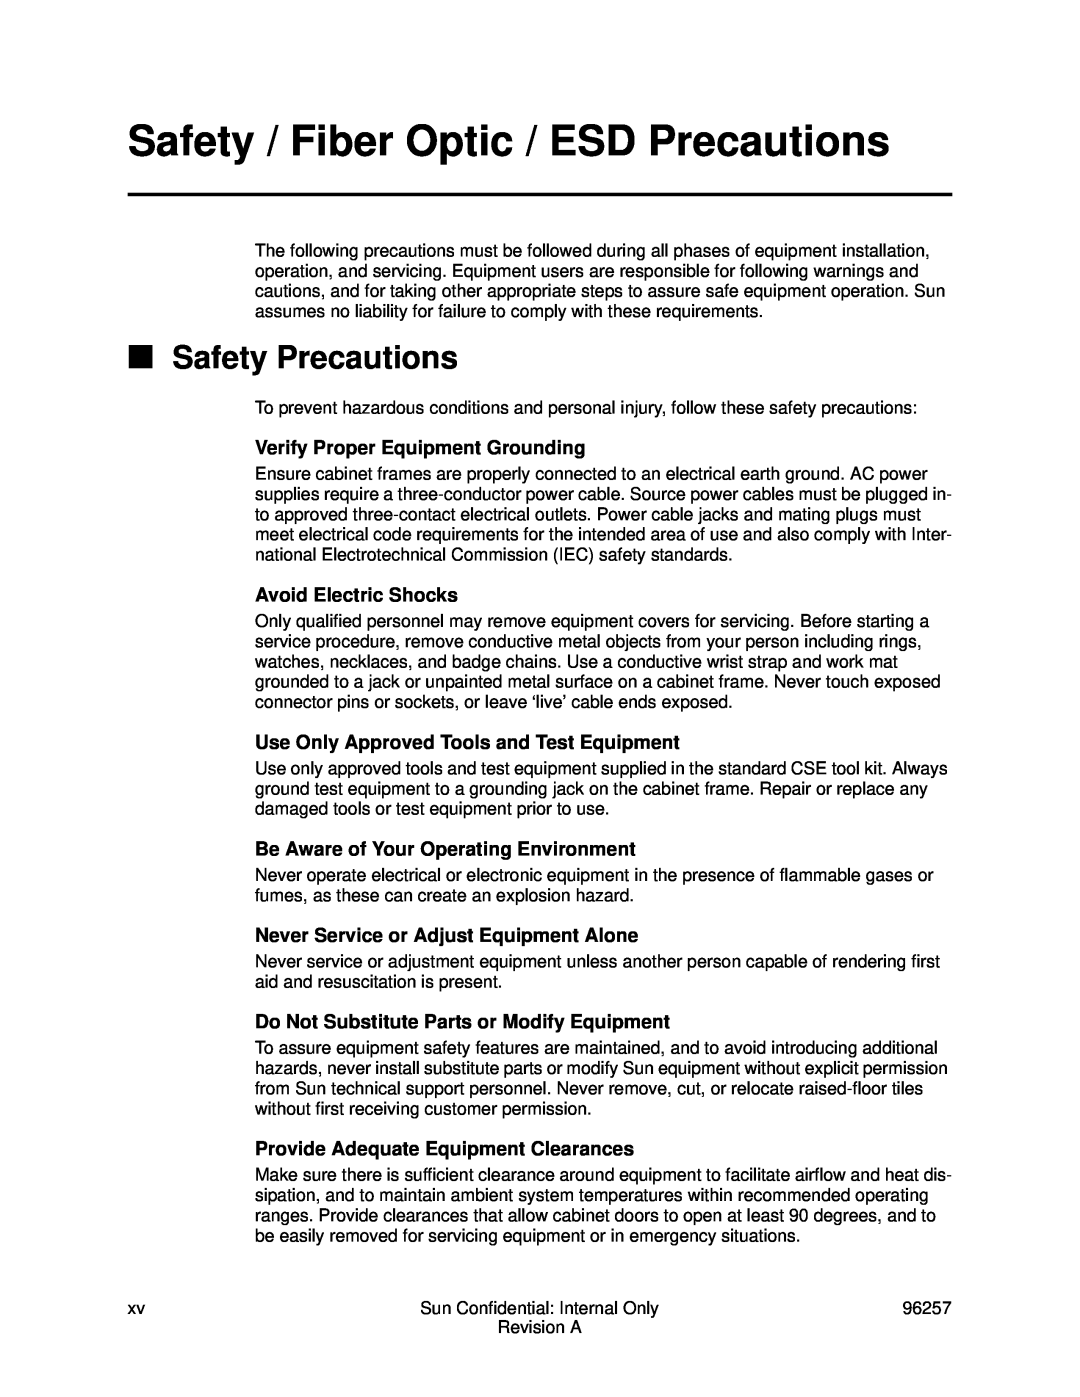 Sun Microsystems 96257 manual Safety / Fiber Optic / ESD Precautions, Safety Precautions, Verify Proper Equipment Grounding 